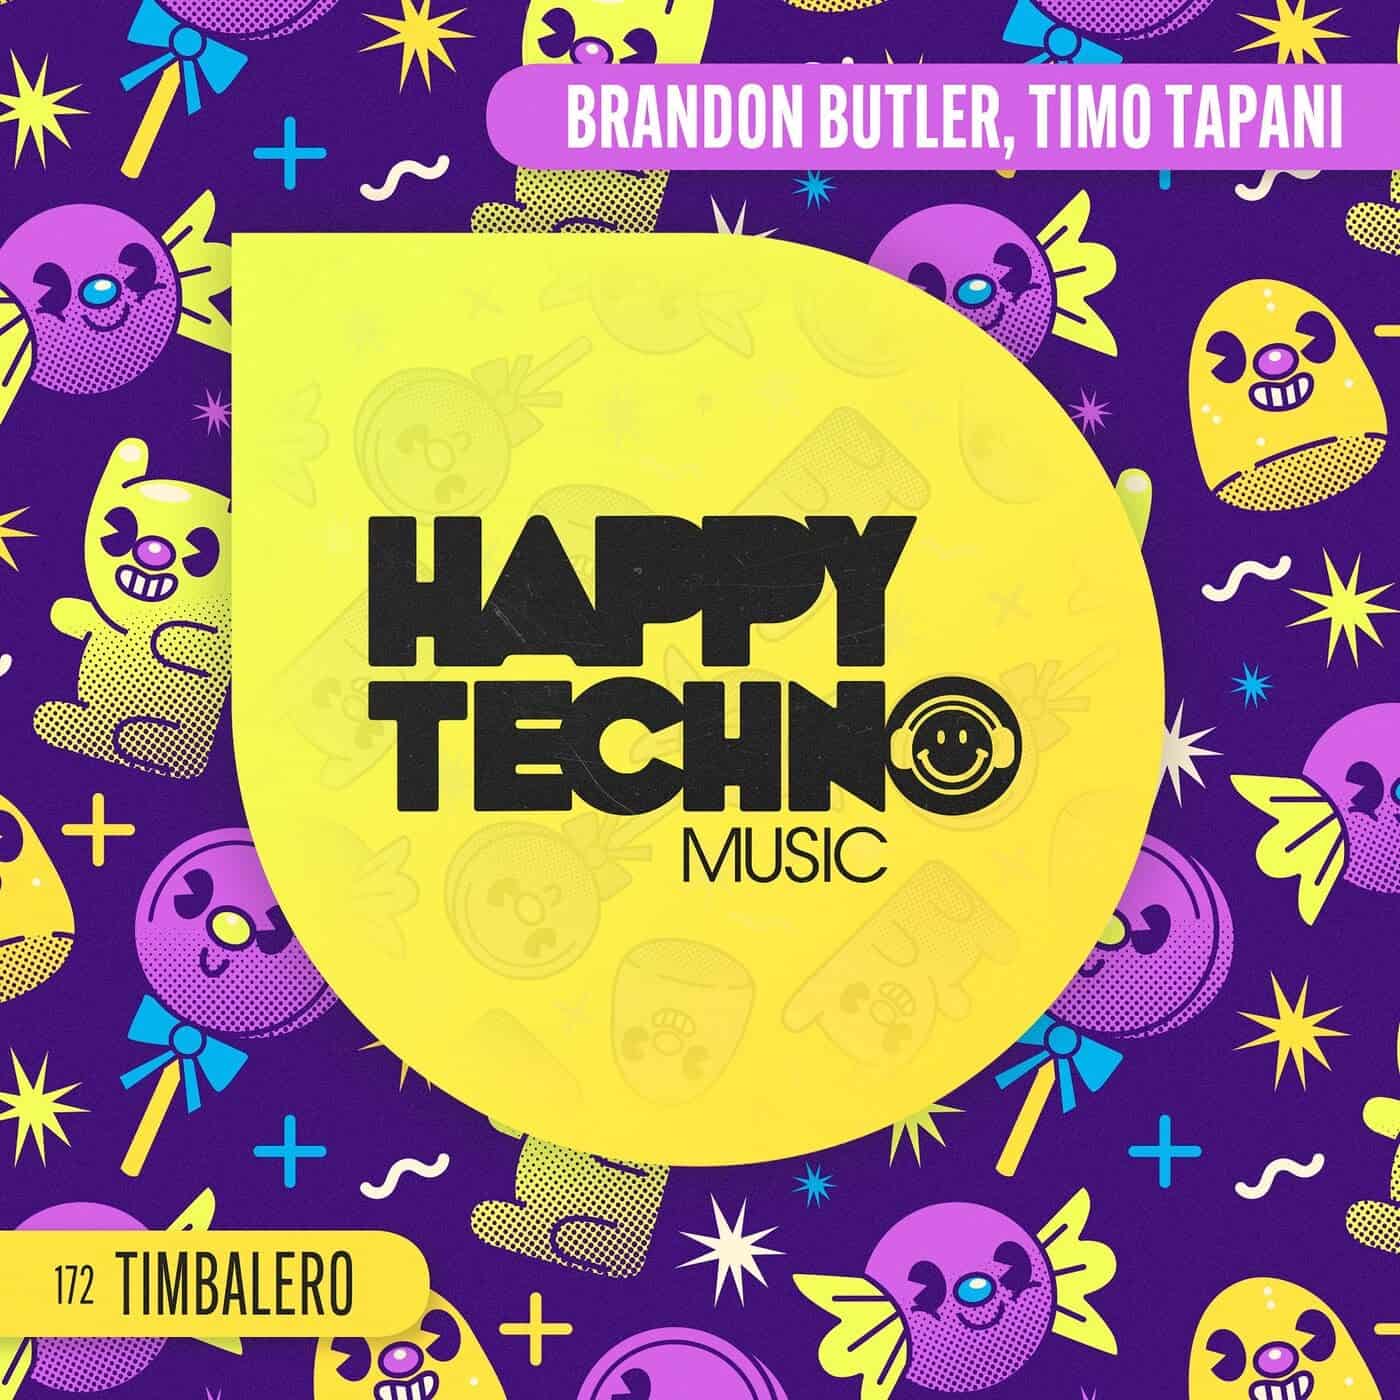 Download Brandon Butler, Timo Tapani - Timbalero on Electrobuzz